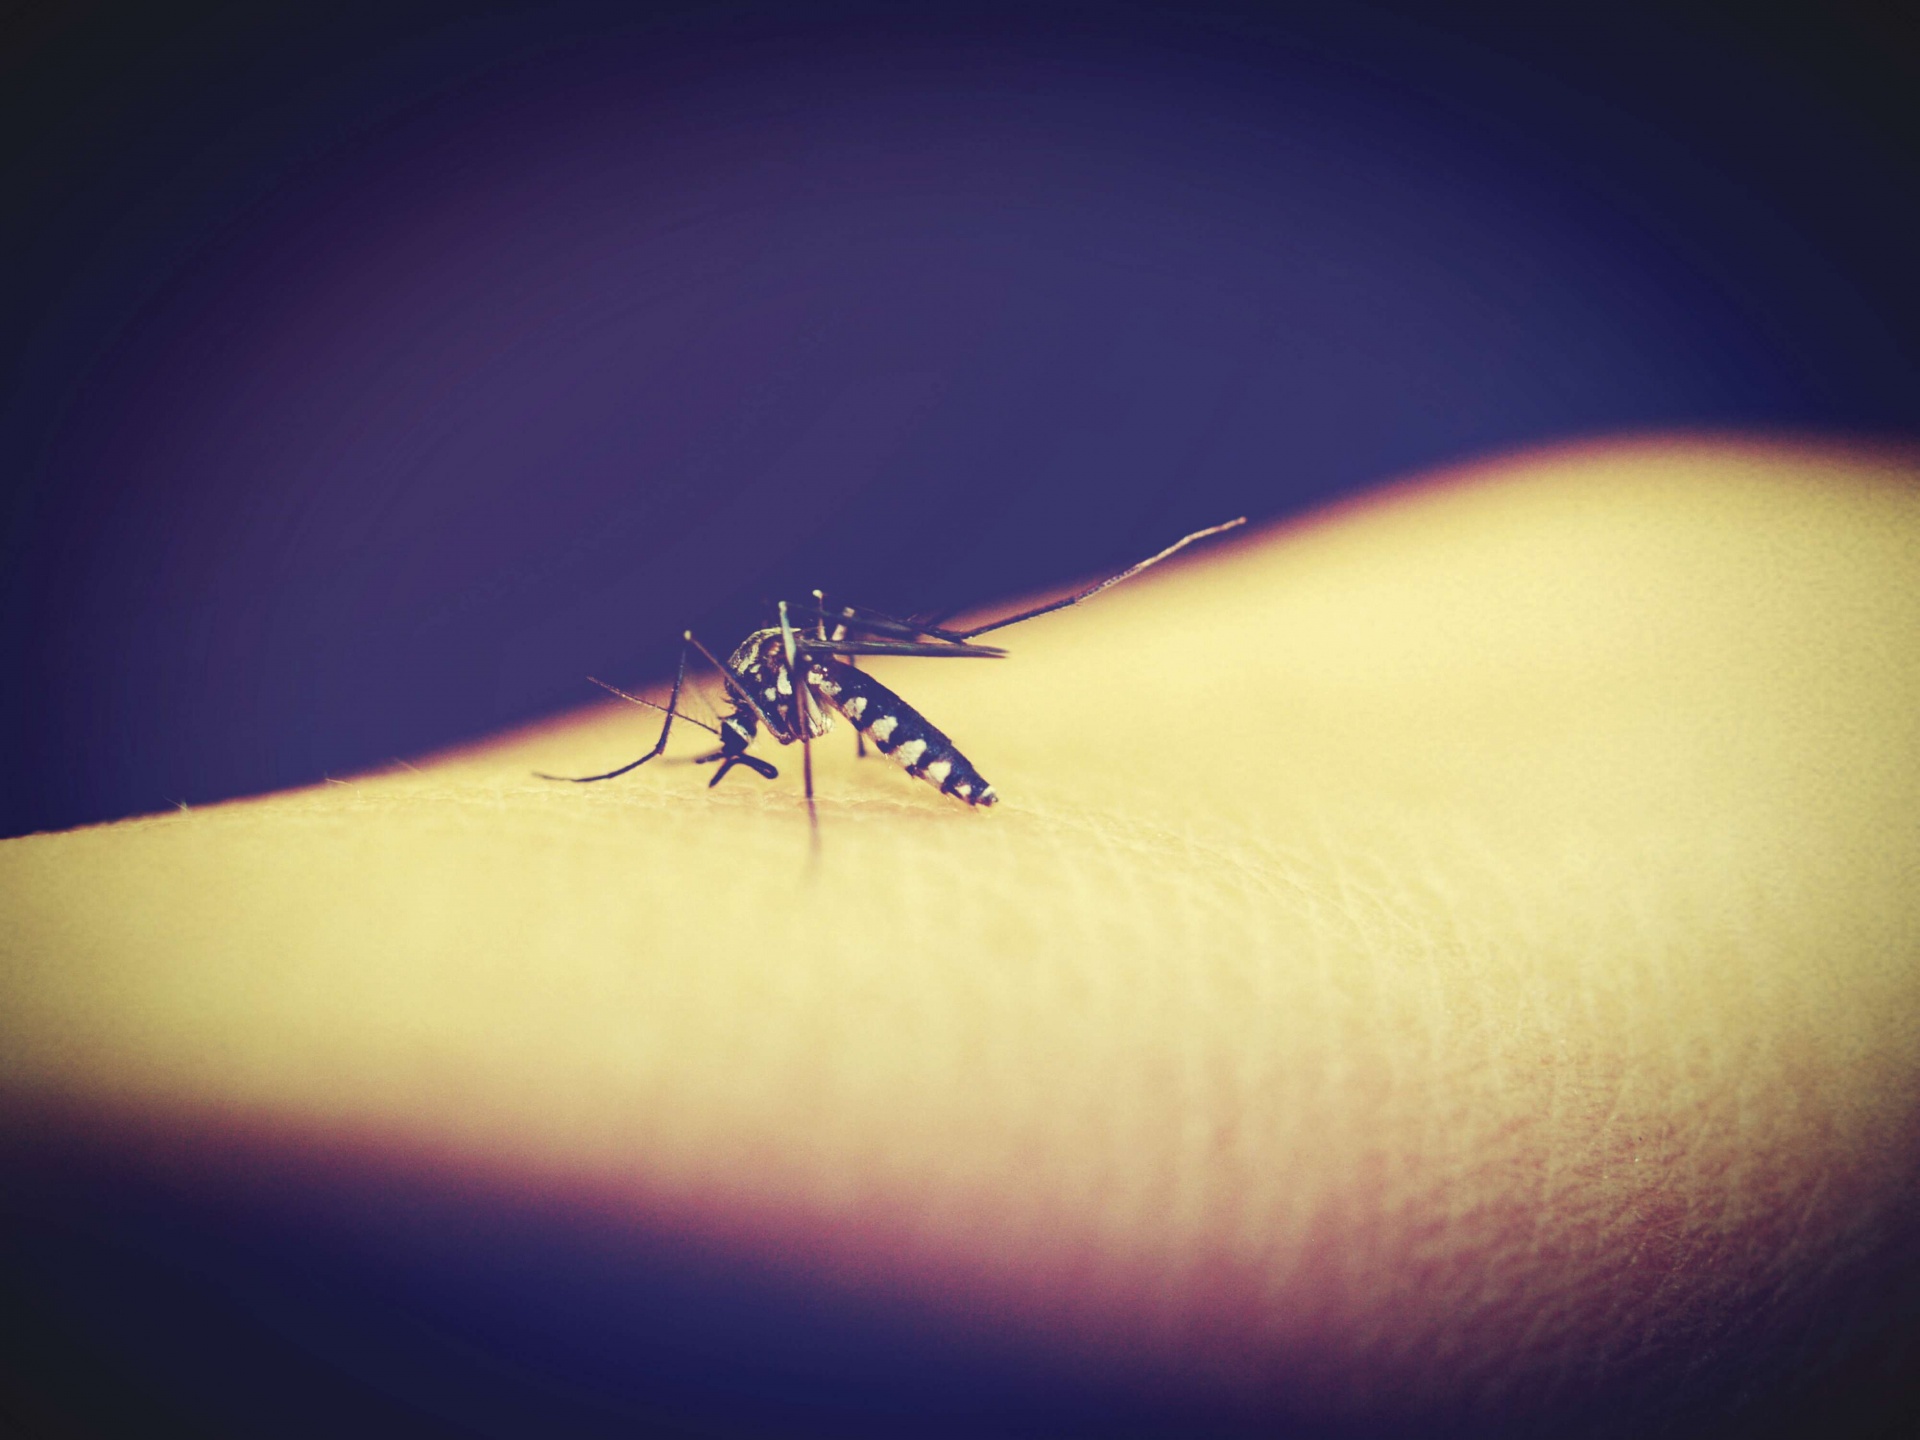 Mosquito chupando sangre